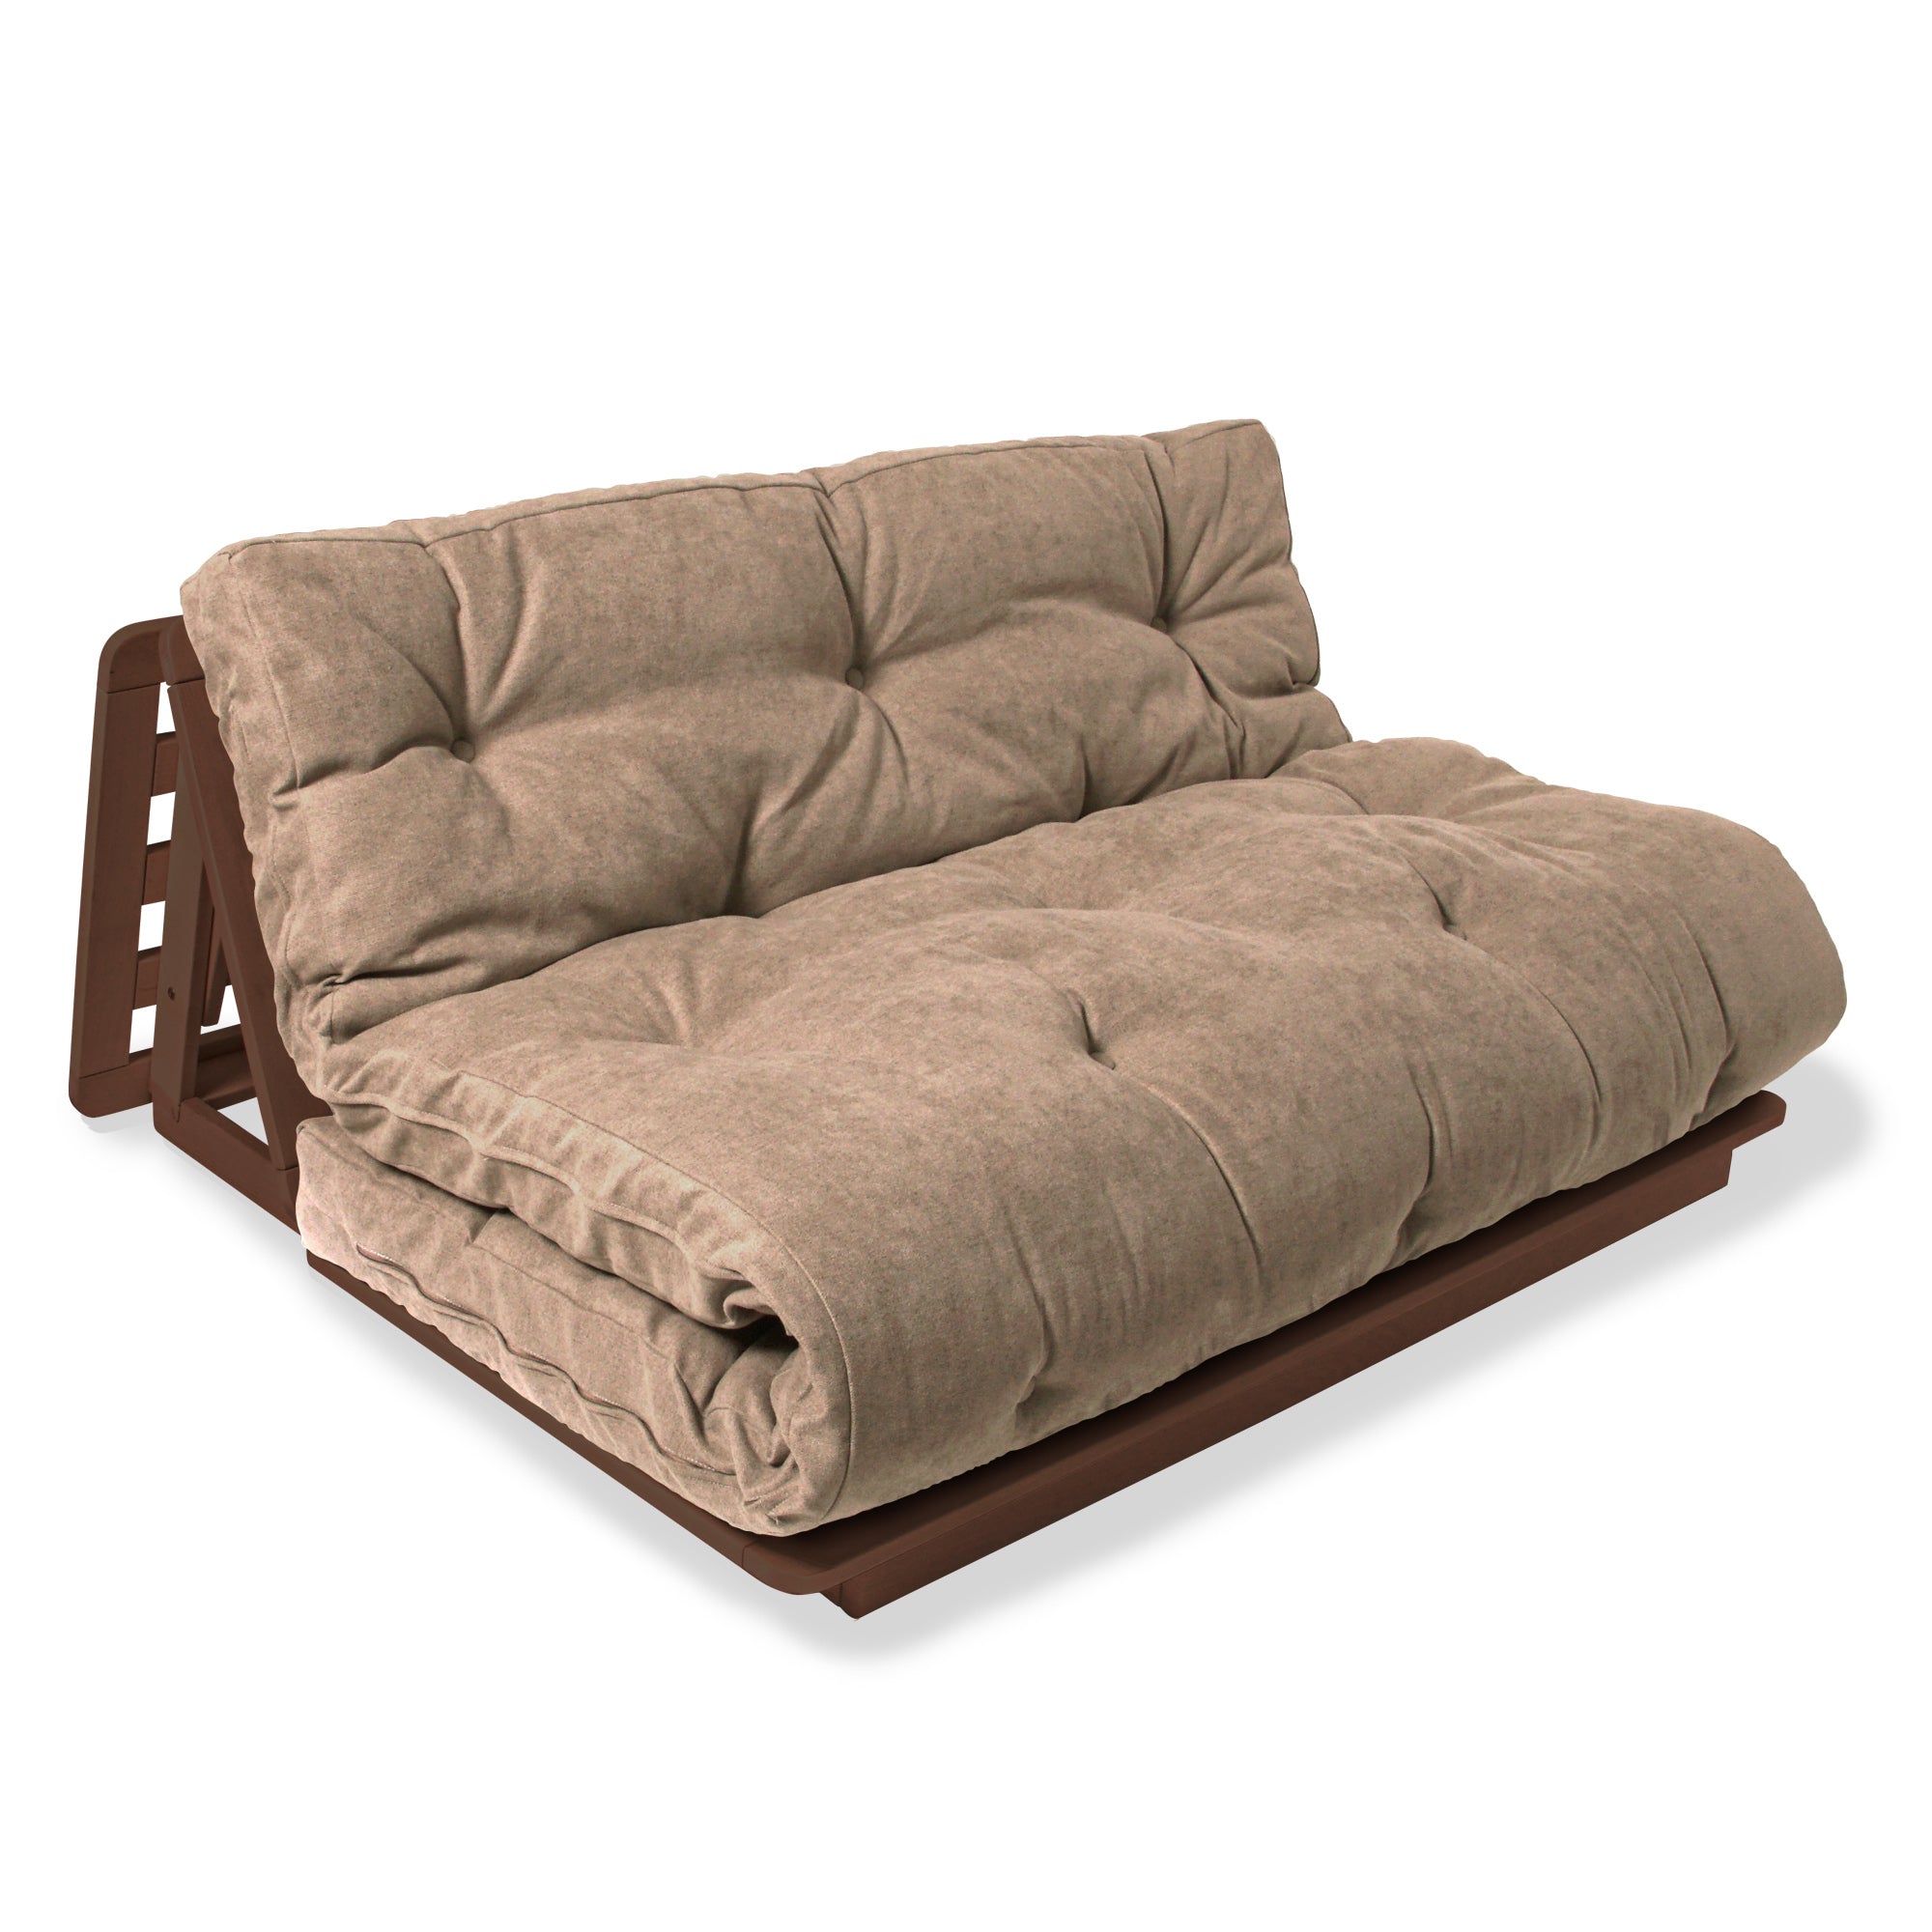 LAYTI-140 Futon Chair-walnut frame-beige fabric